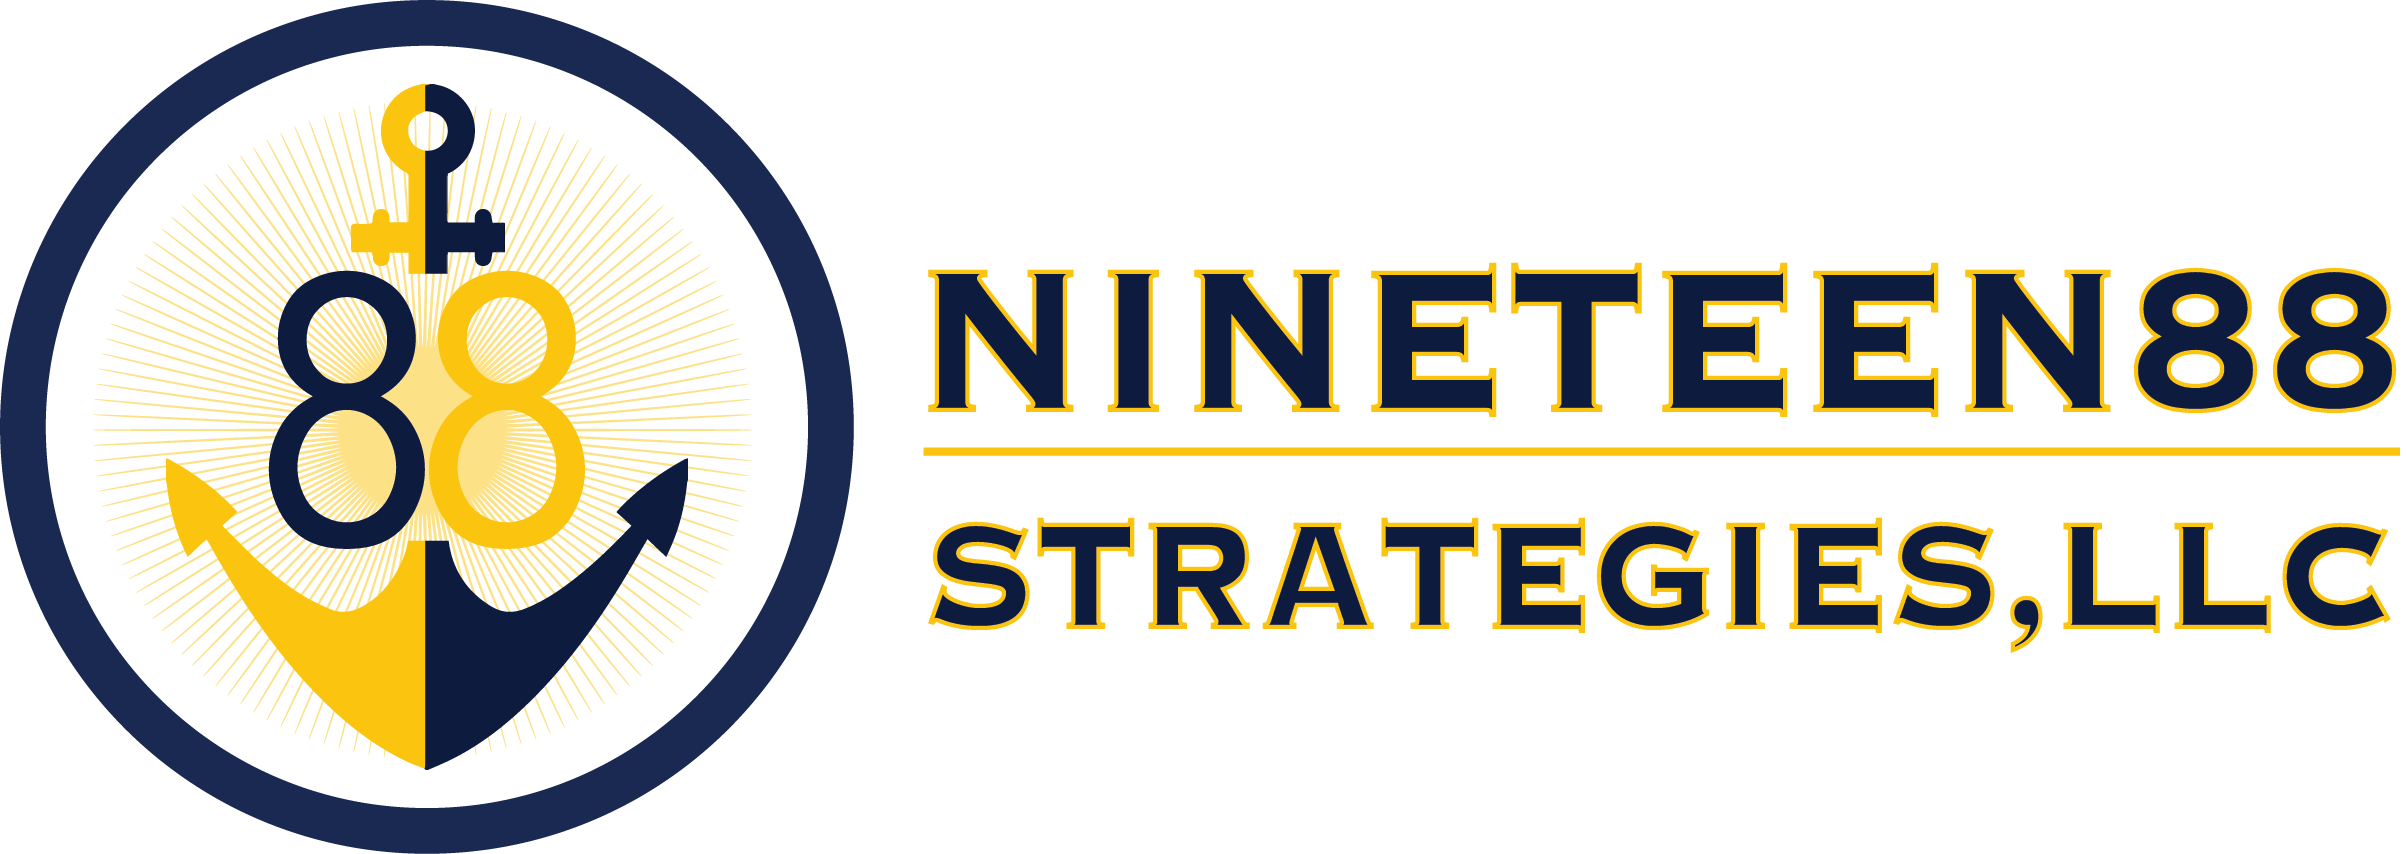 nineteen88strategiesllclogo[31]